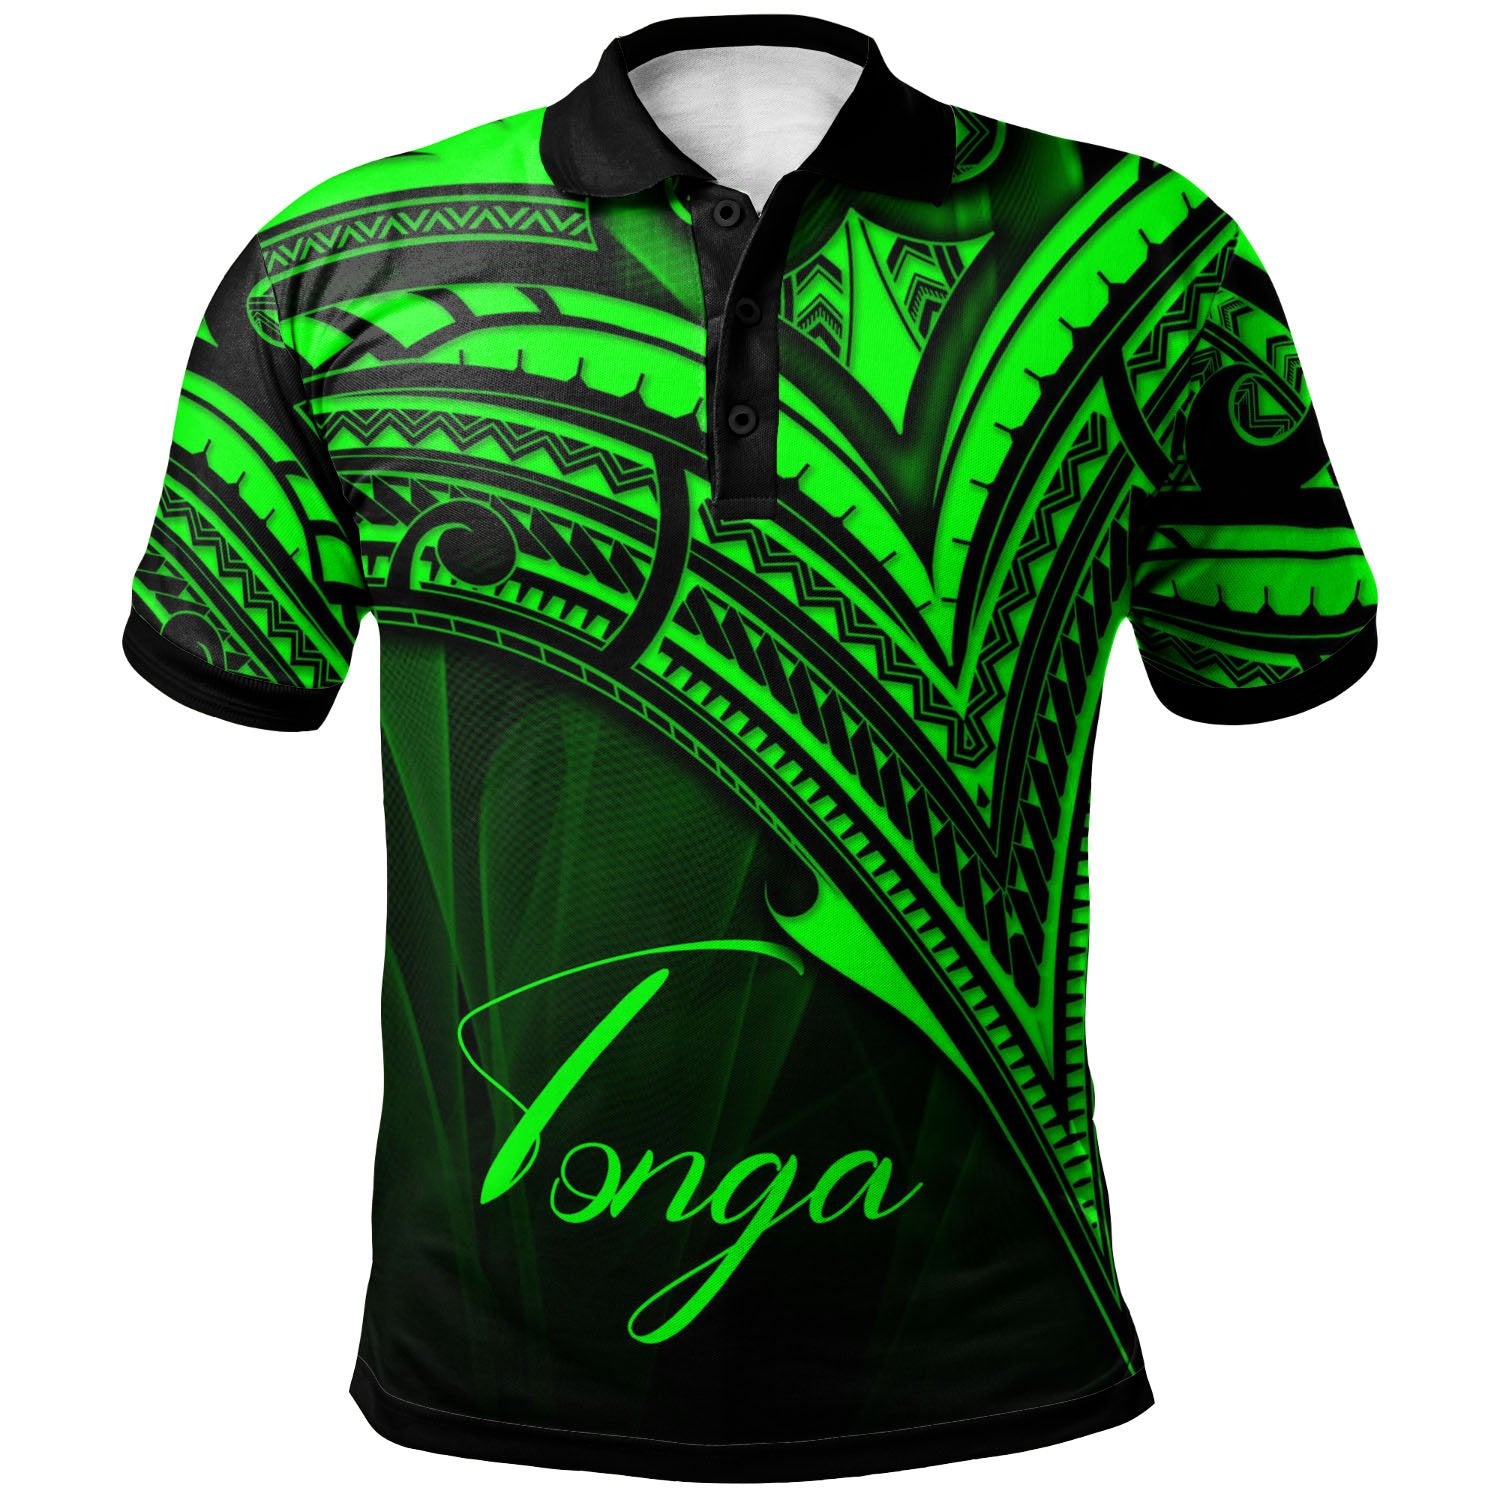 Tonga Polo Shirt Green Color Cross Style Unisex Black - Polynesian Pride